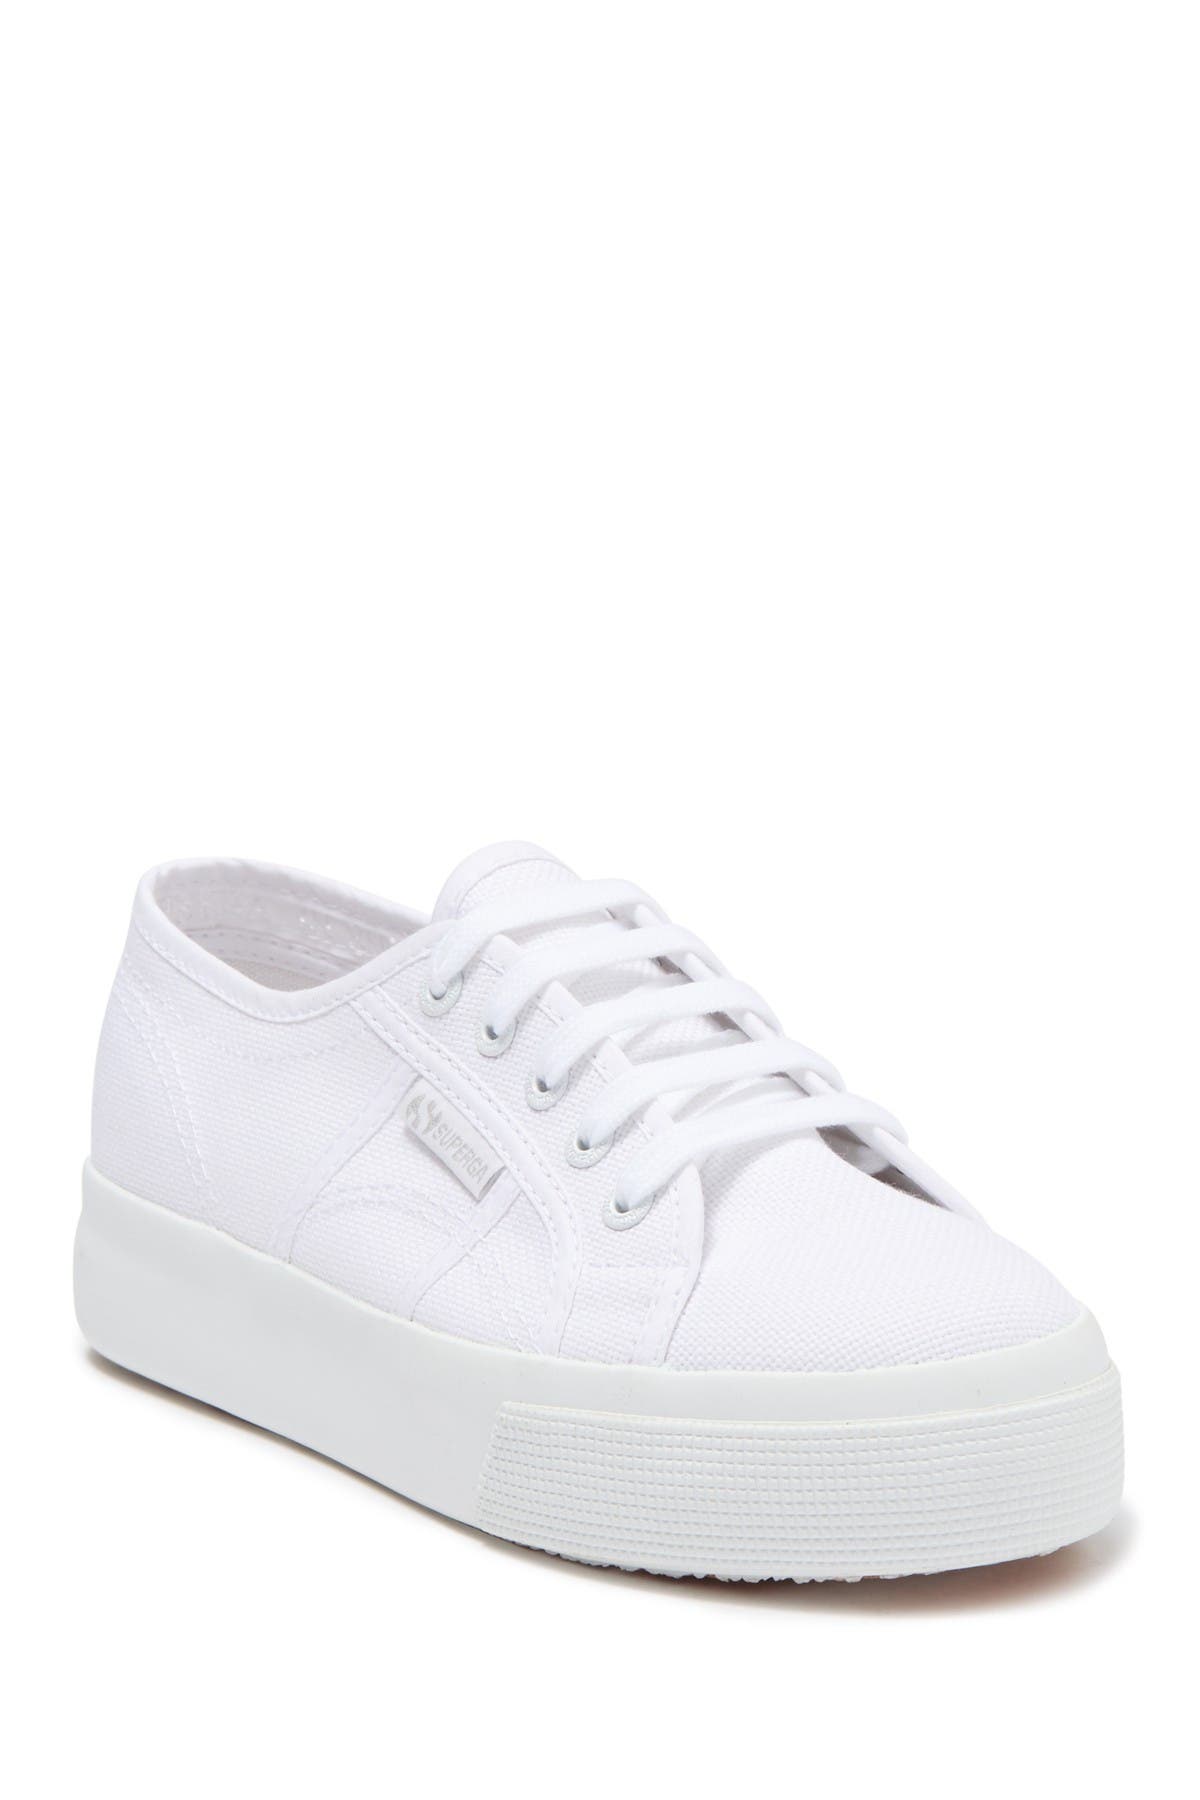 Superga Cotu Platform Sneaker In Tot White